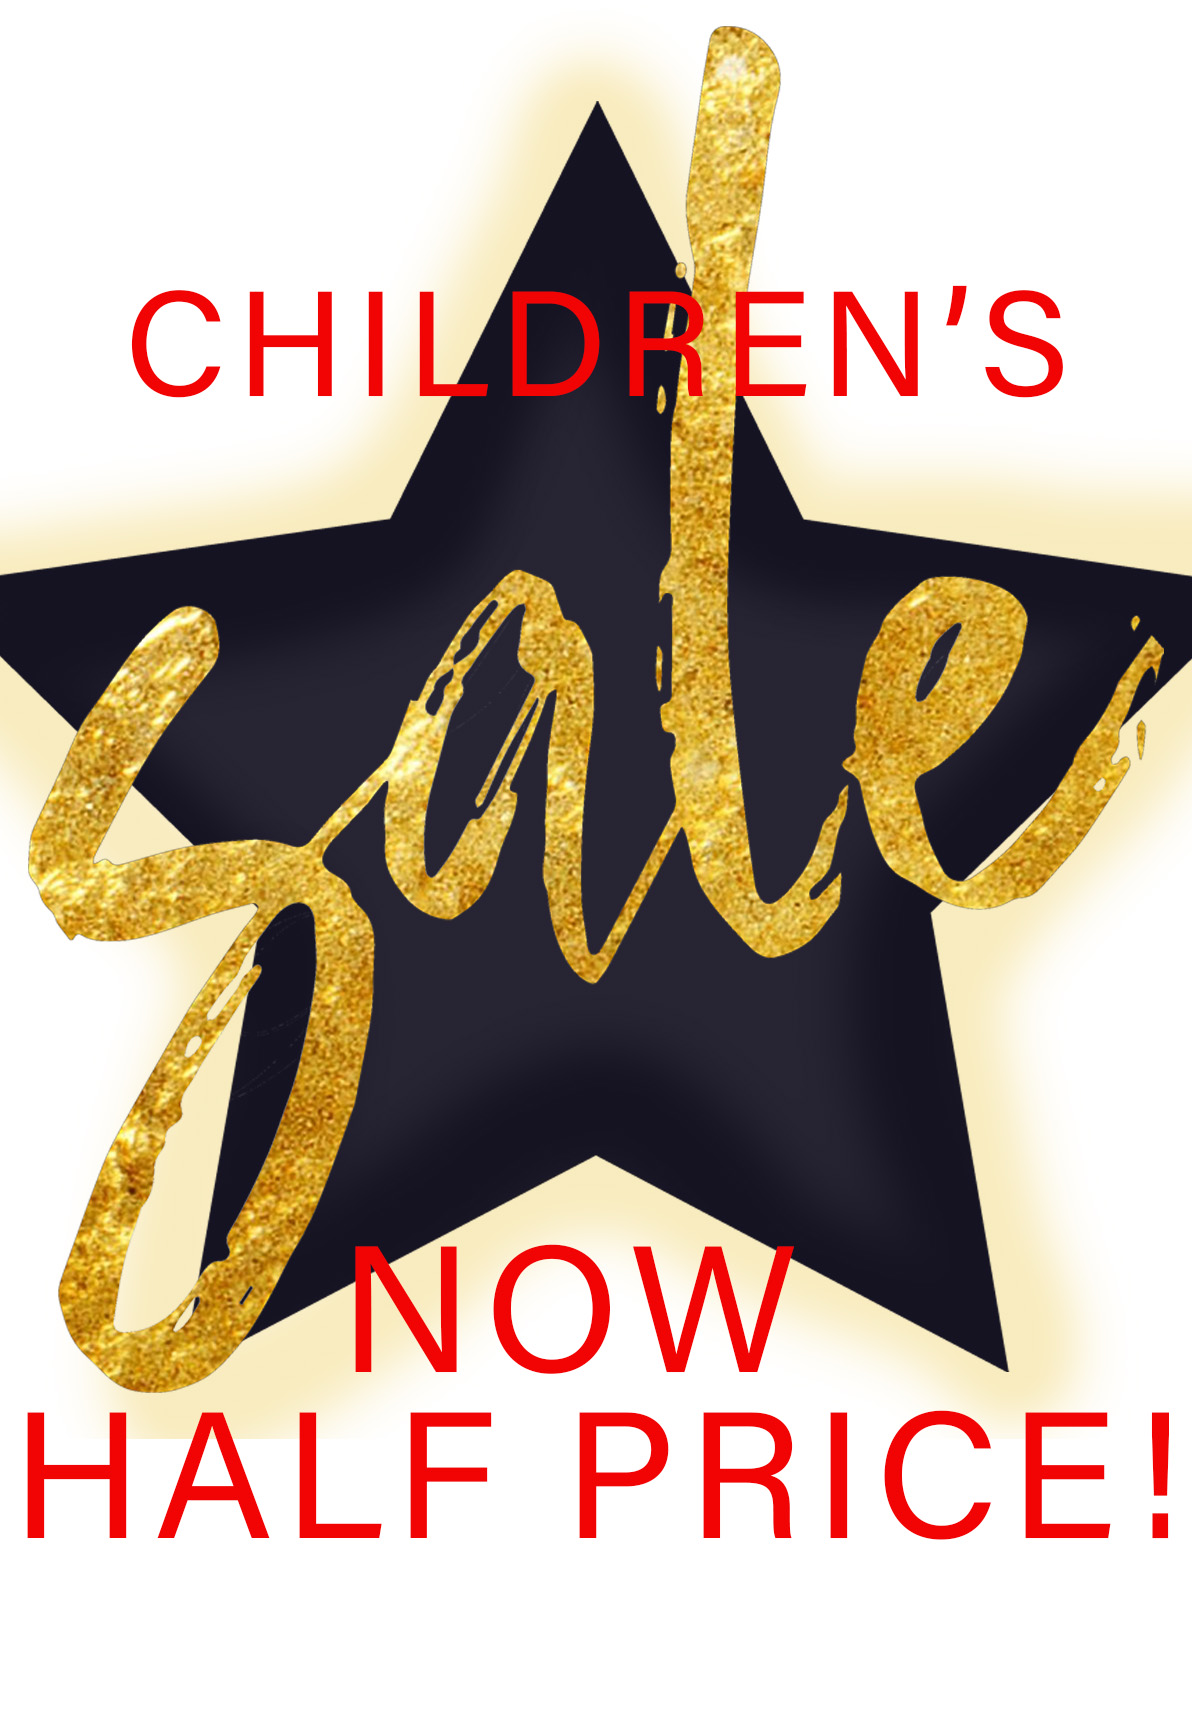 CHILDRENS SALE! NOW HALF PRICE!!